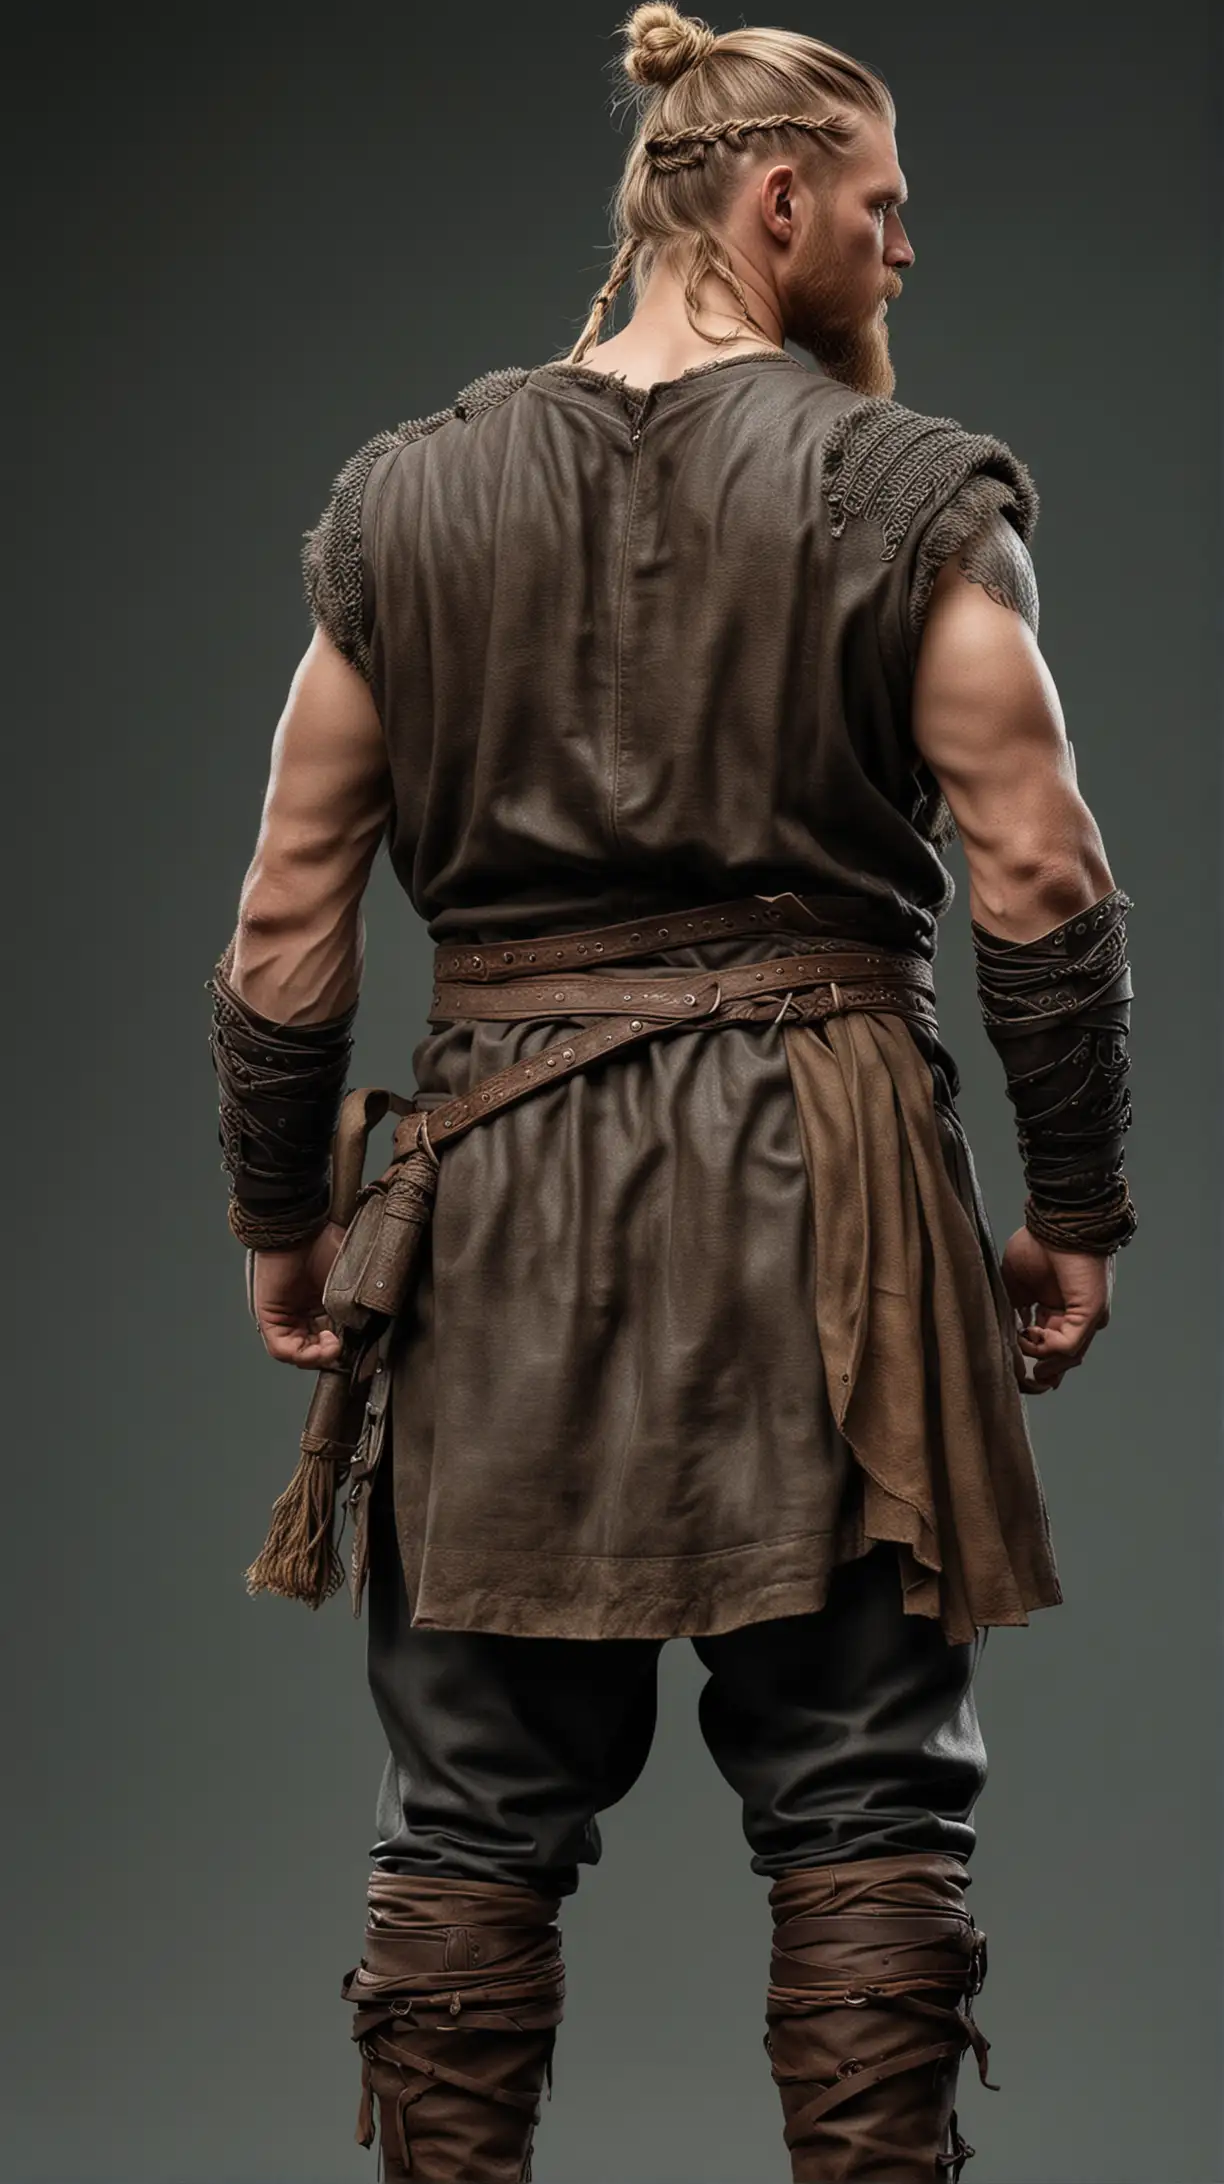 Muscular Viking Man with Tied Hair in Viking Clothing